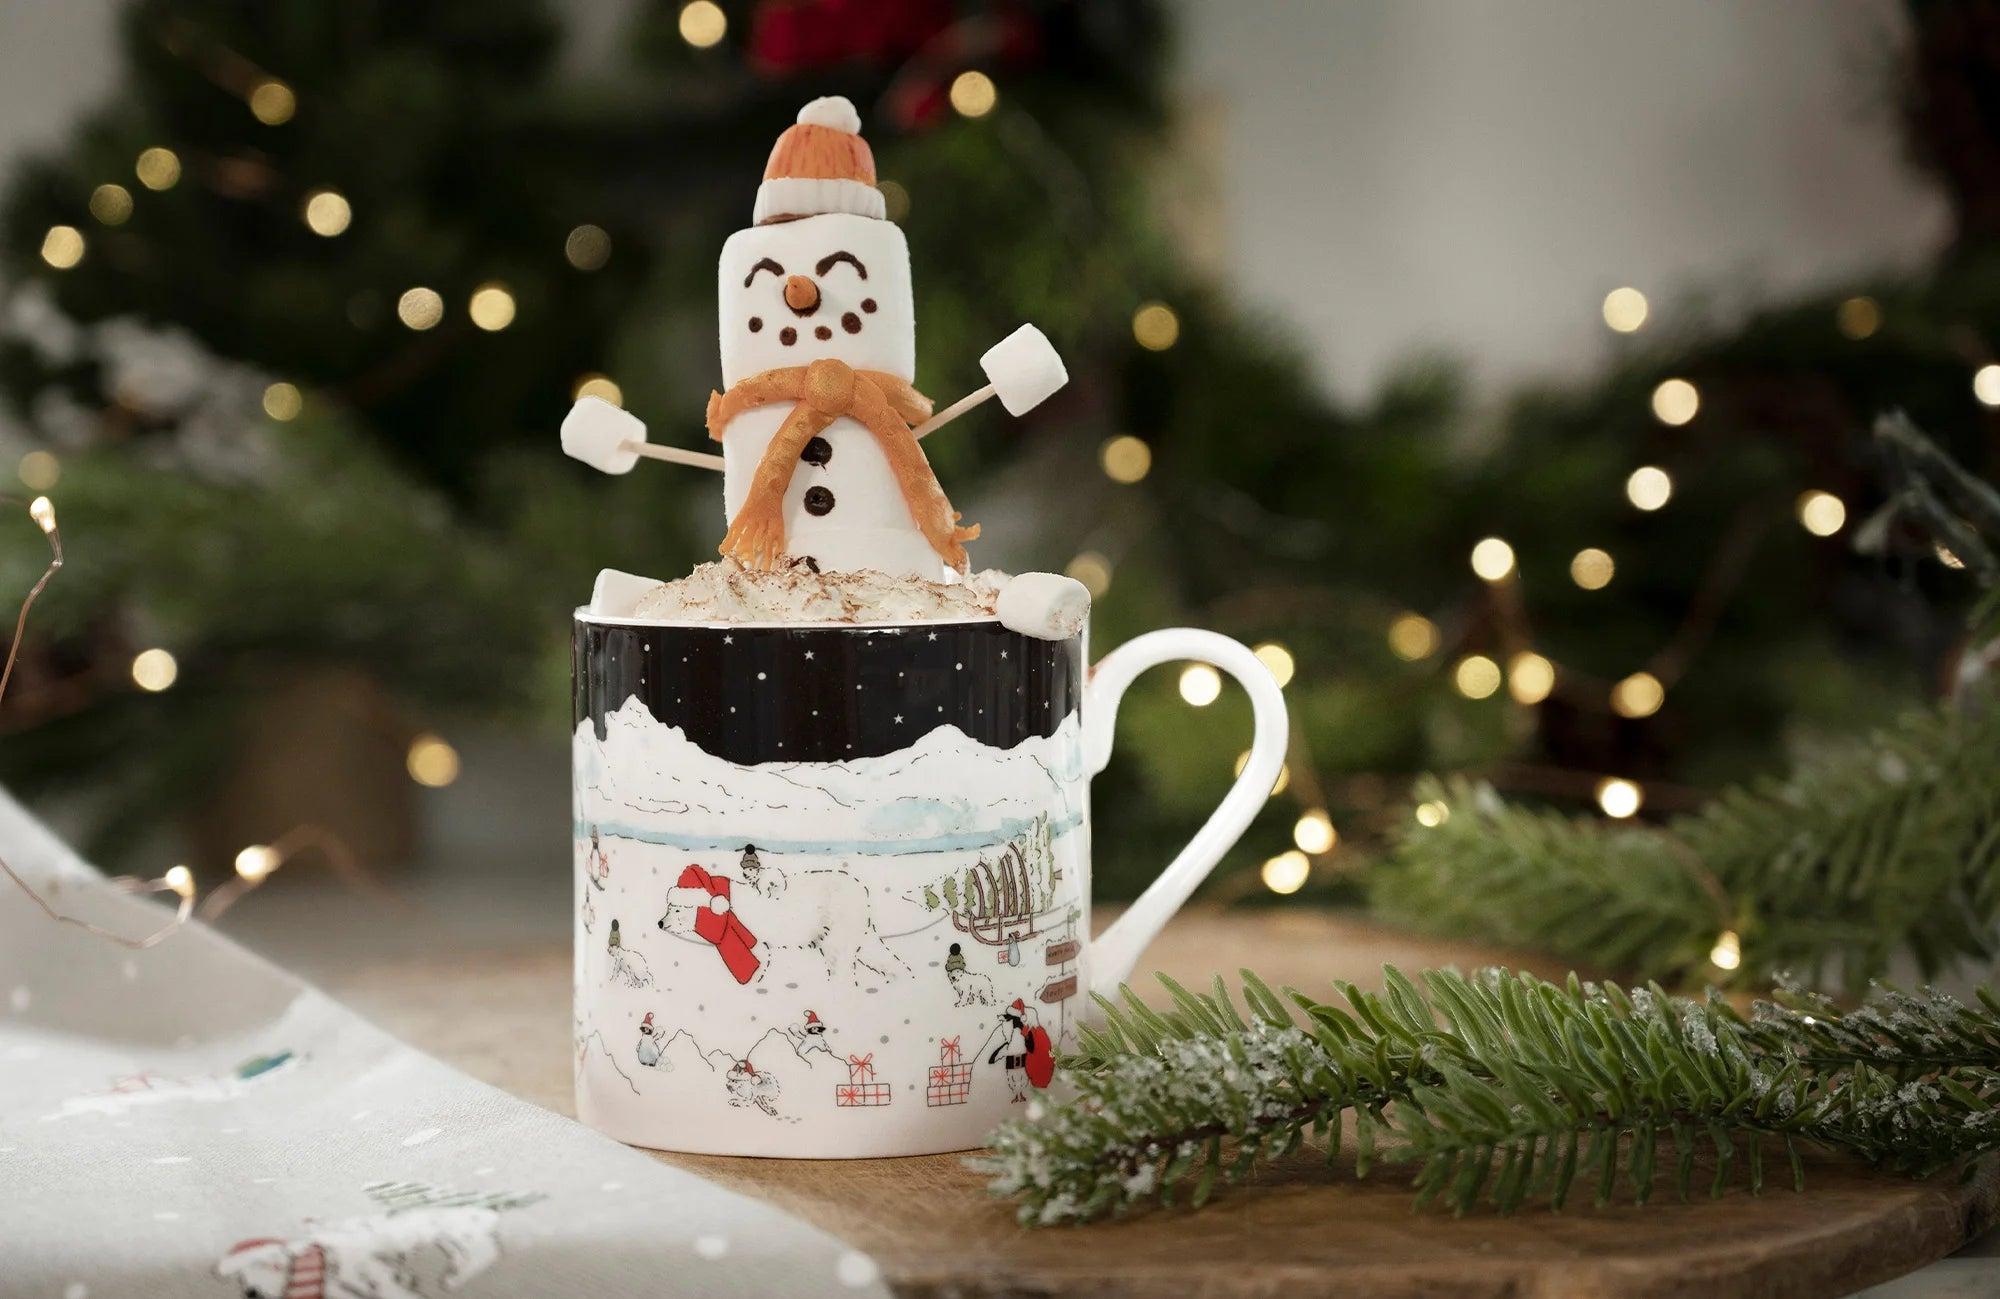 Make Your Own Marshmallow Snowman